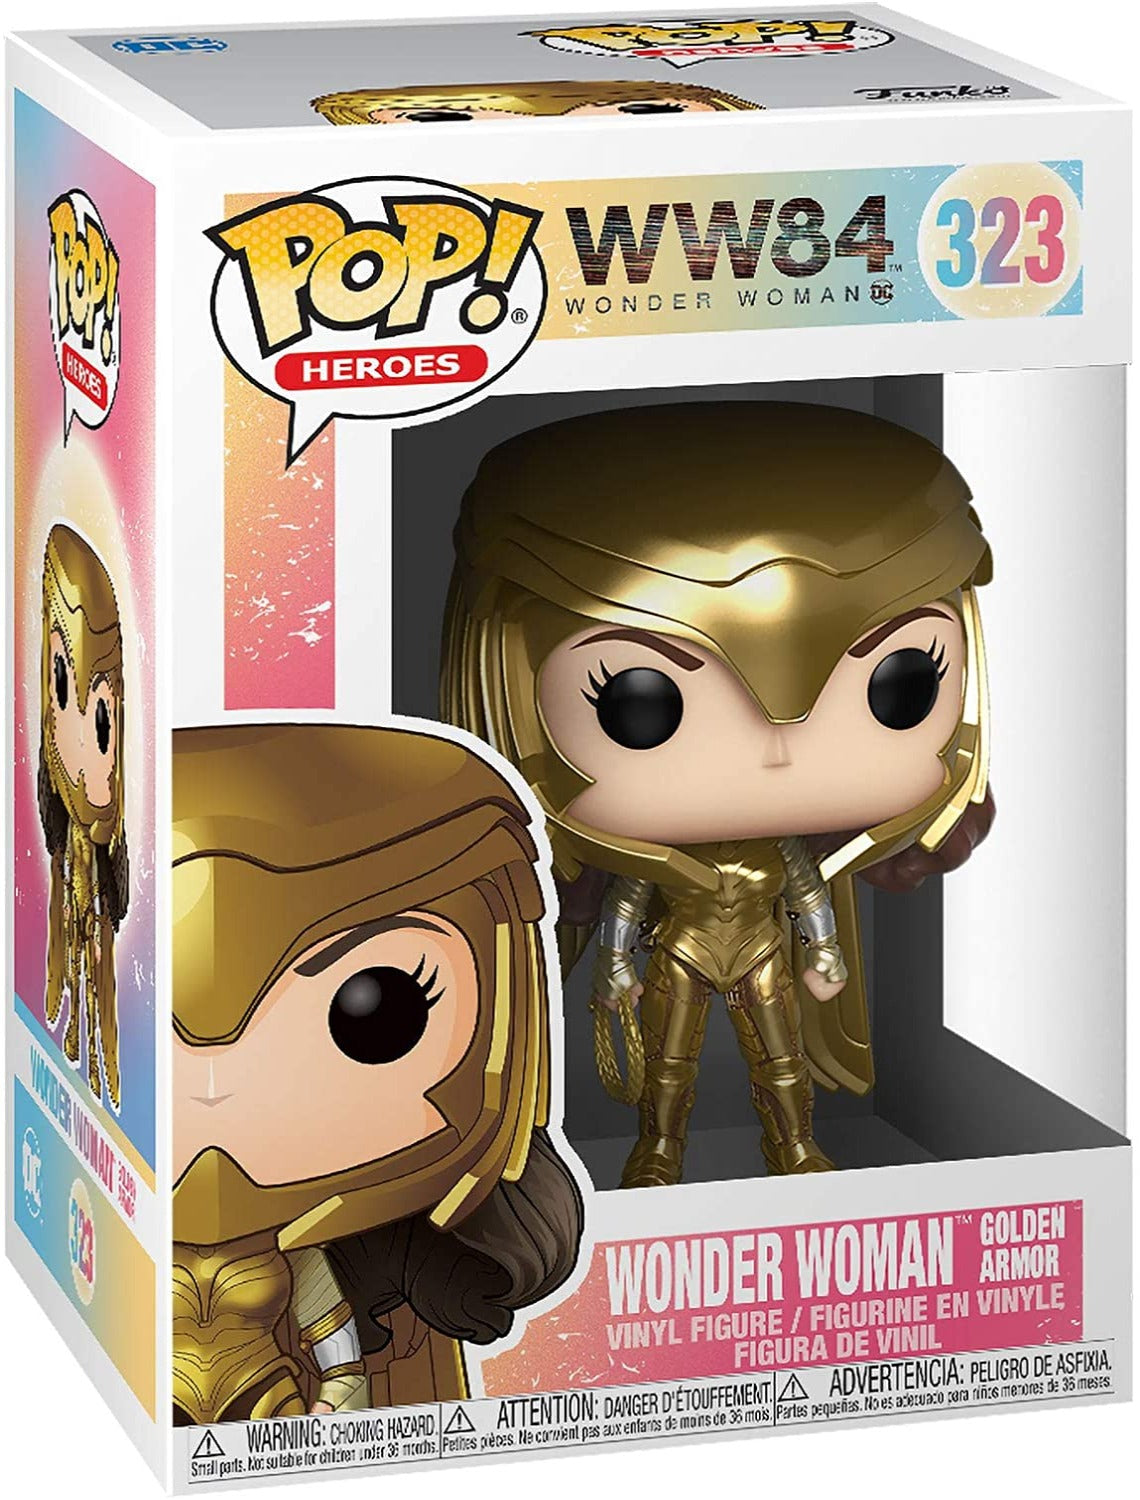 DC WW84: Wonder Woman Gold Power Metallic Pop! Vinyl Figure (323)